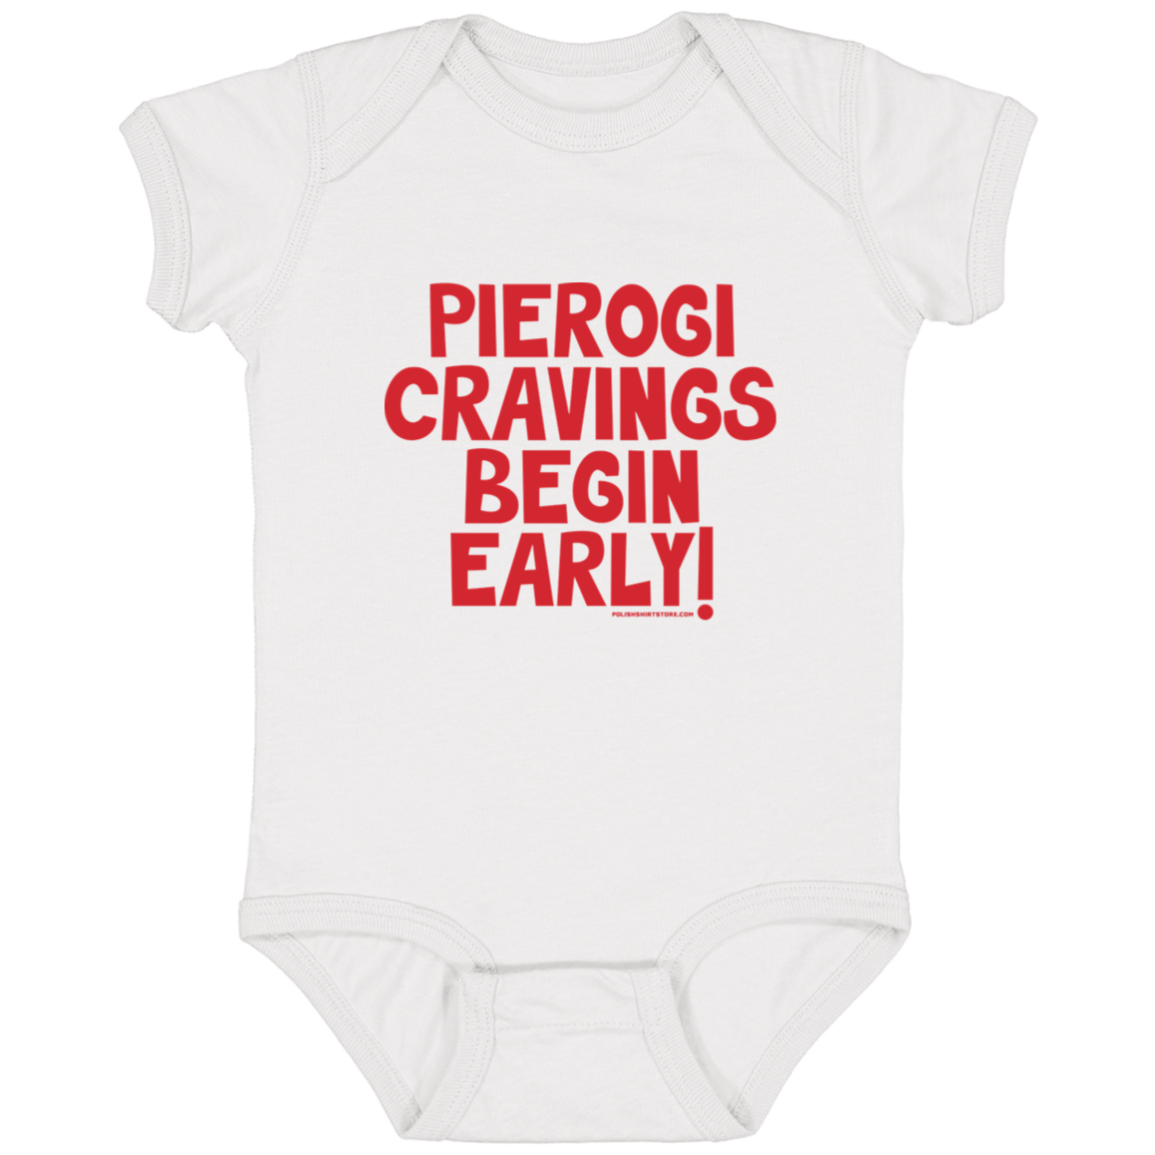 Pierogi Cravings Begin Early Infant Bodysuit Baby CustomCat White Newborn 